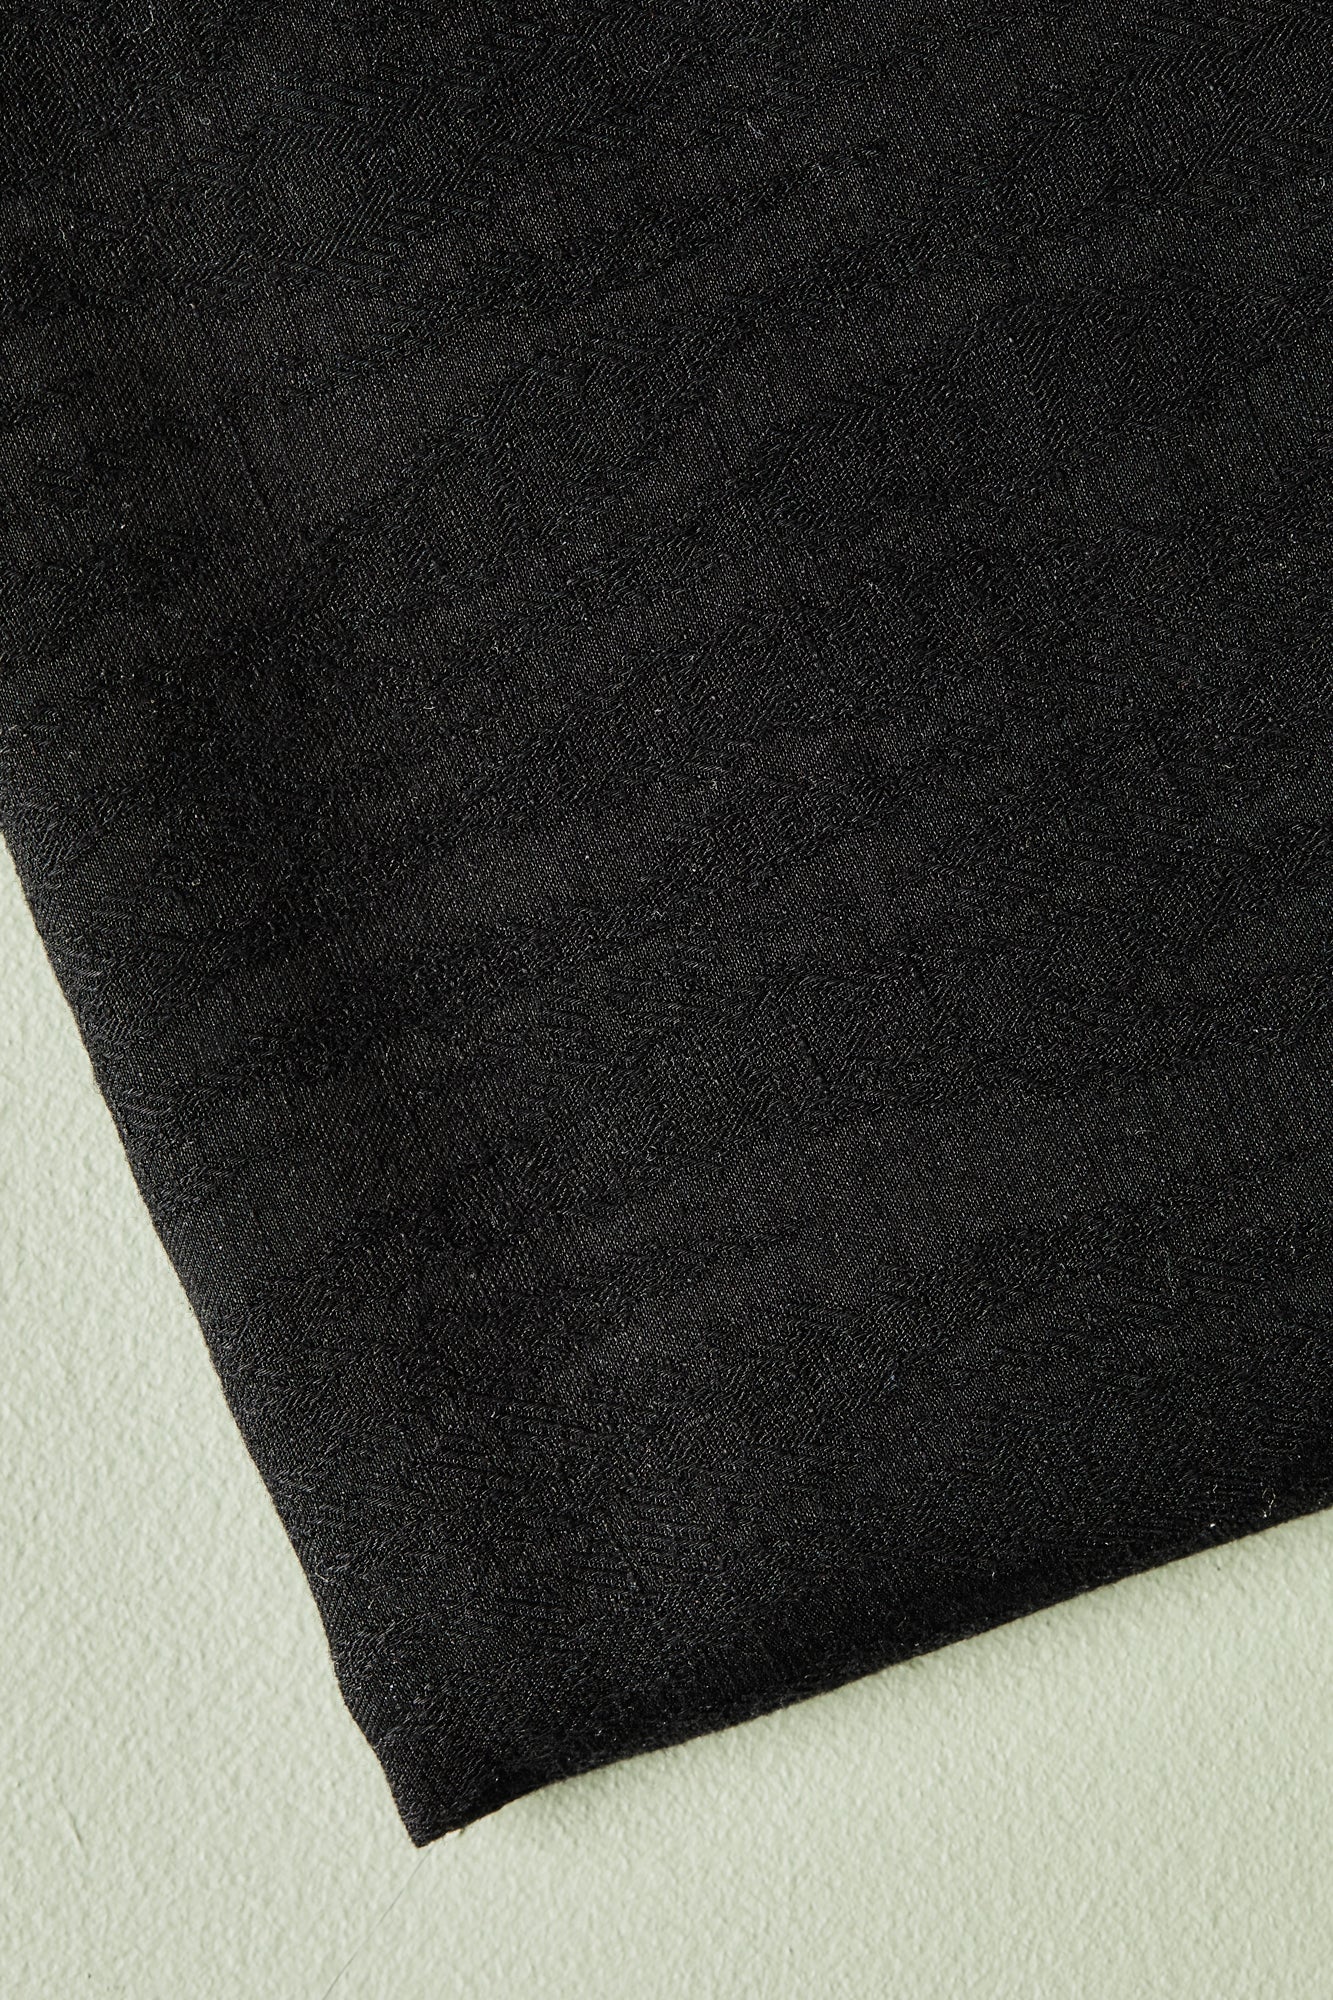 Close up of black Hoya jacquard blend linen sewing fabric